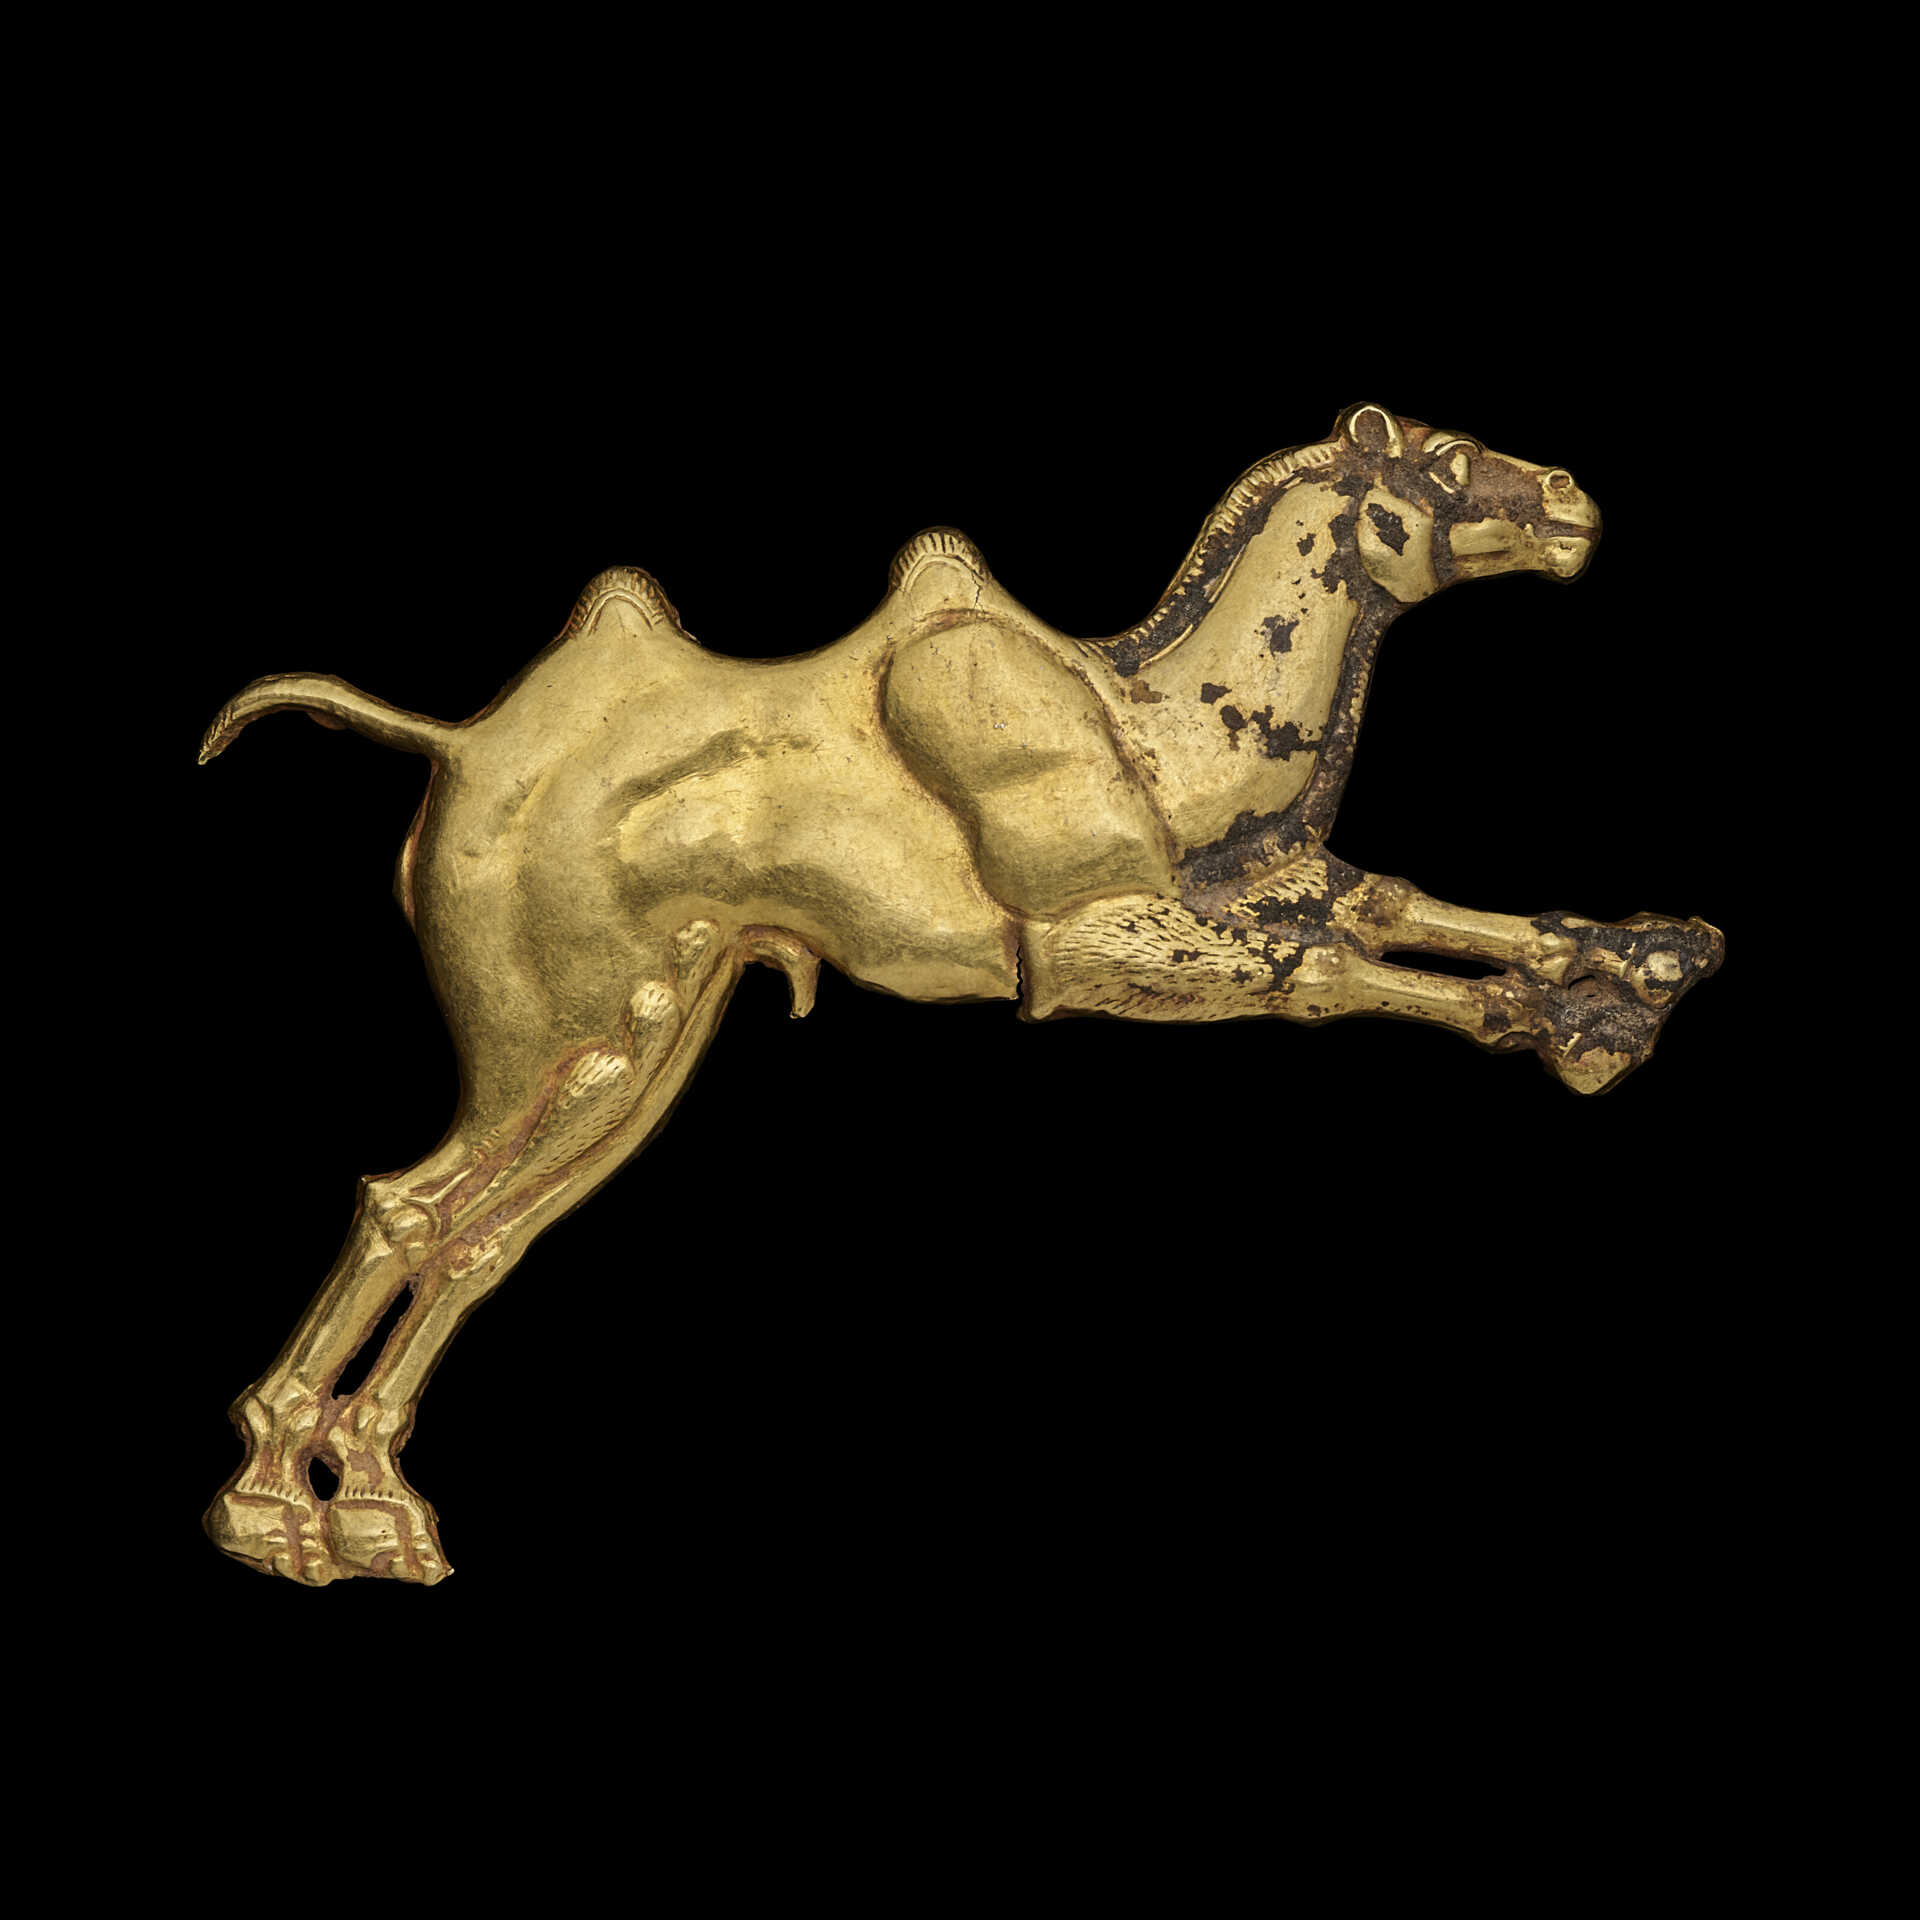 AN ACHAEMENID GOLD APPLIQUE OF A BACTRIAN CAMEL